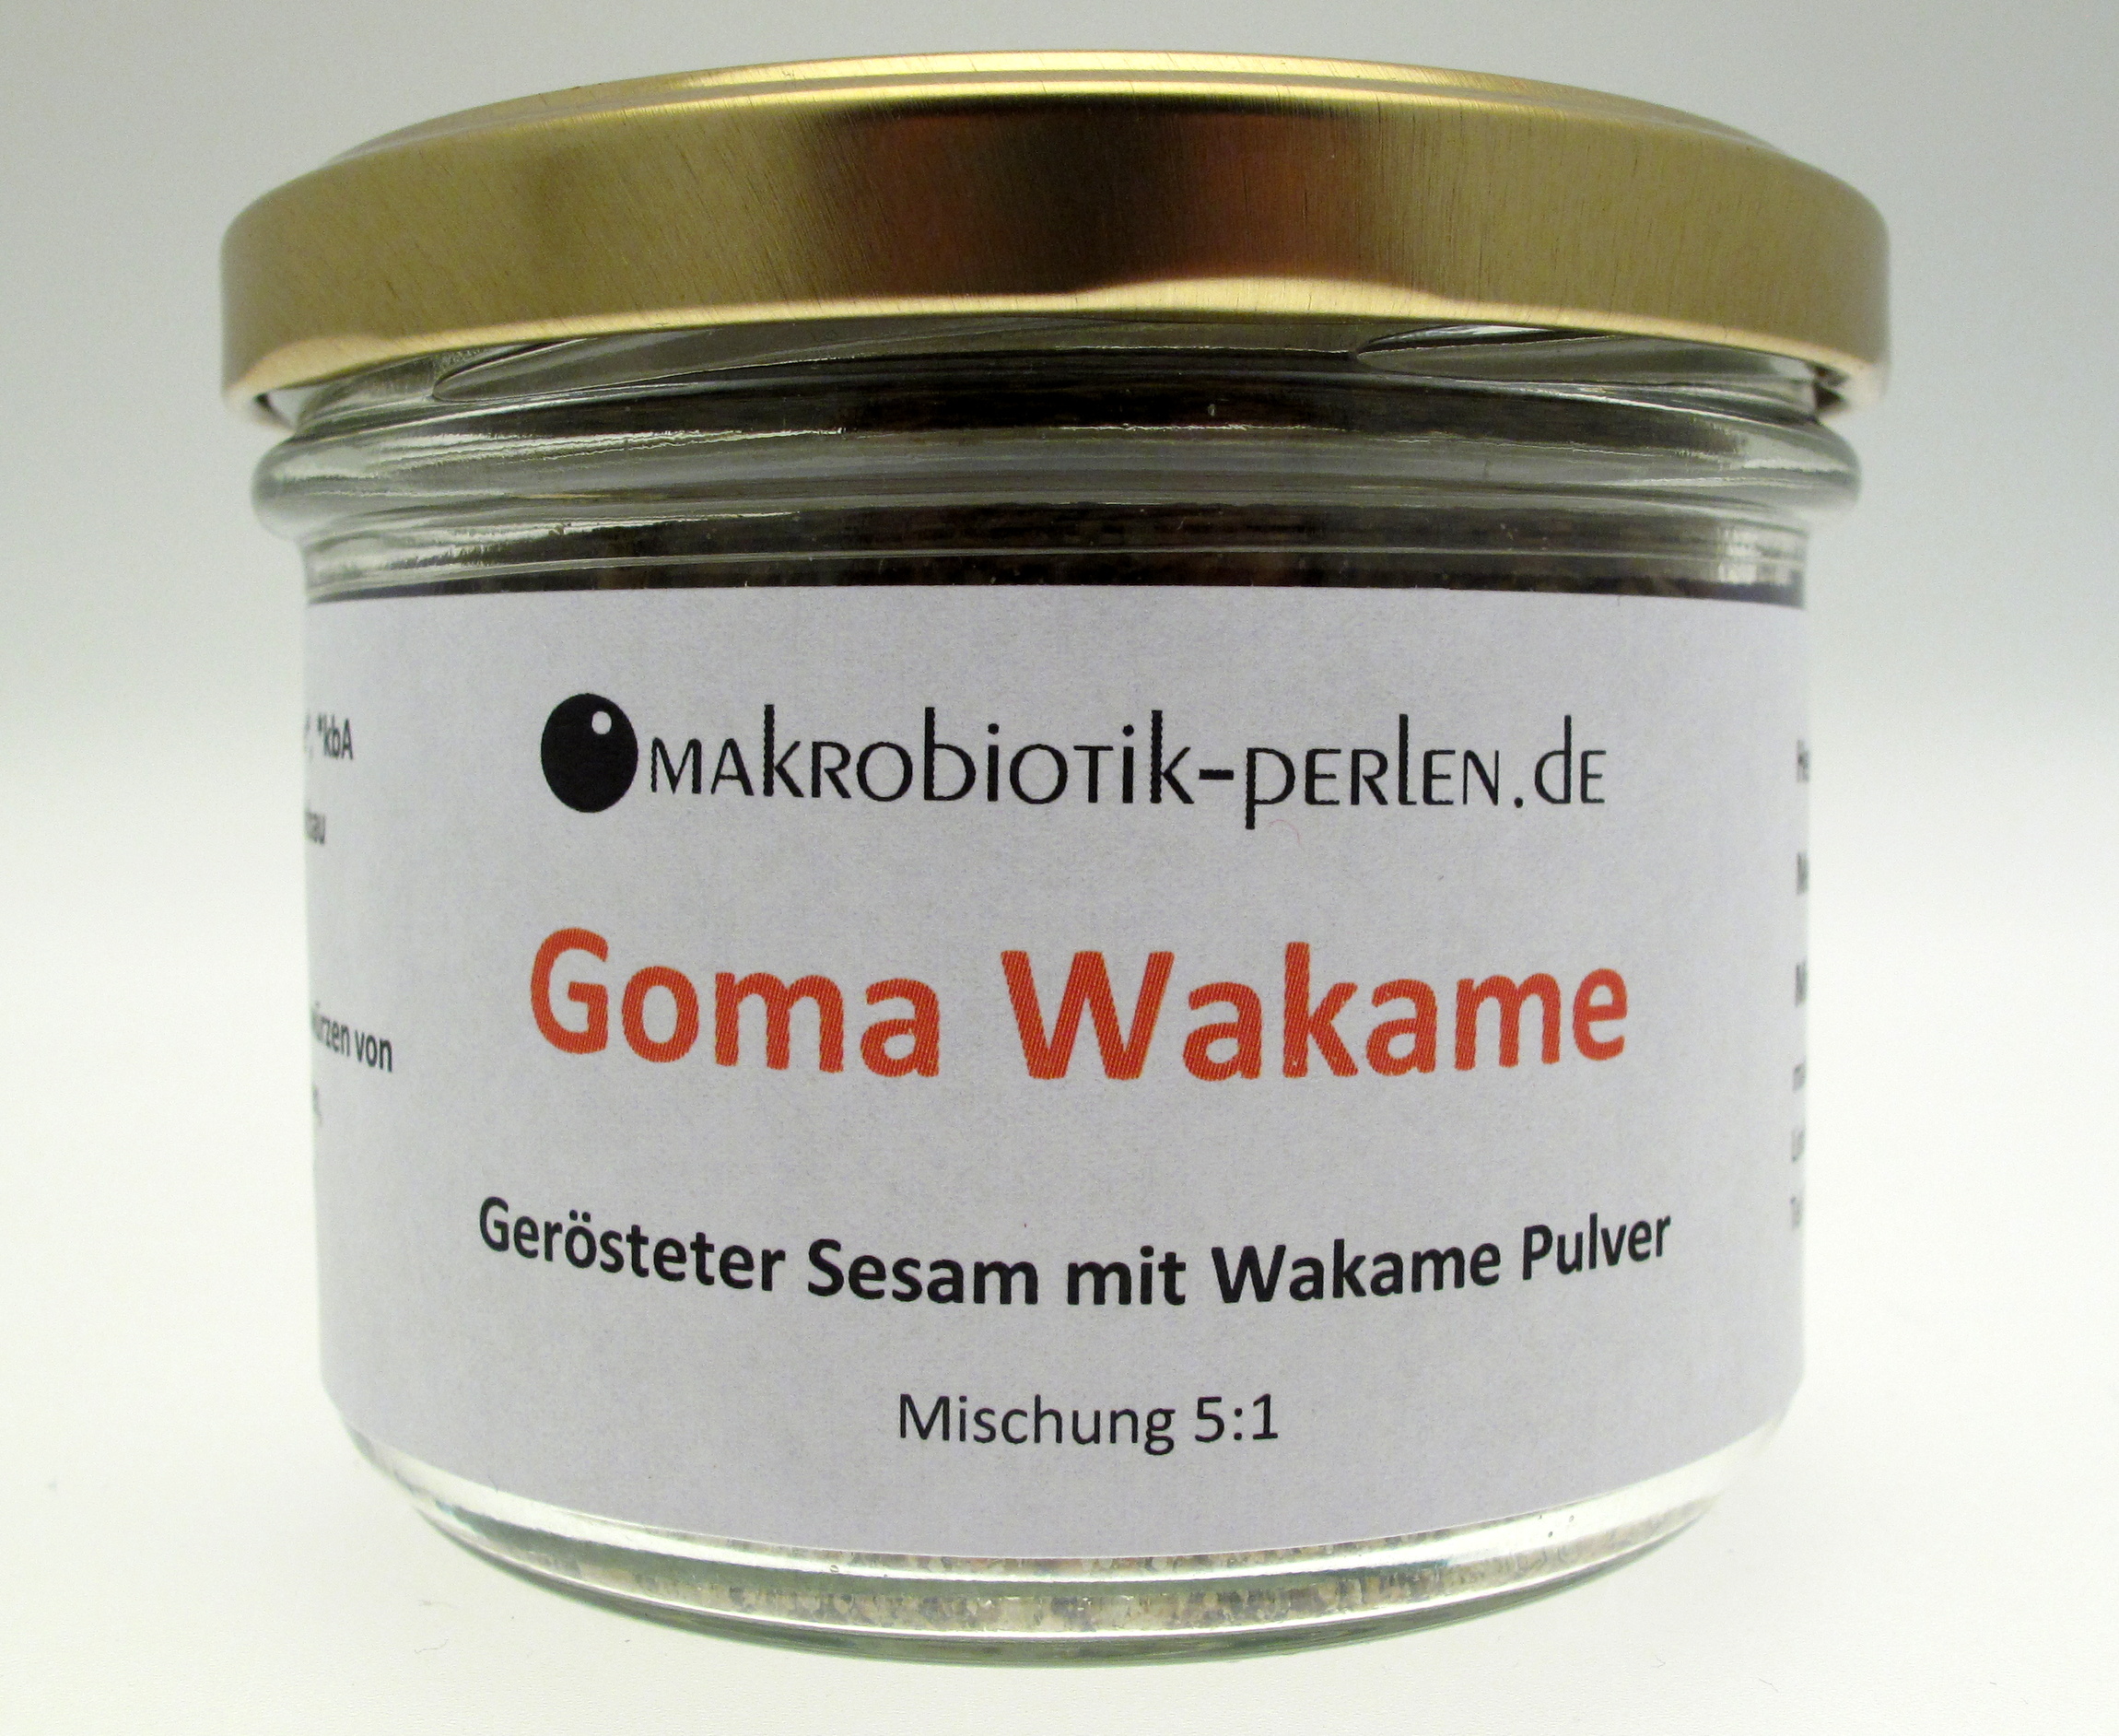 Goma Wakame (ger